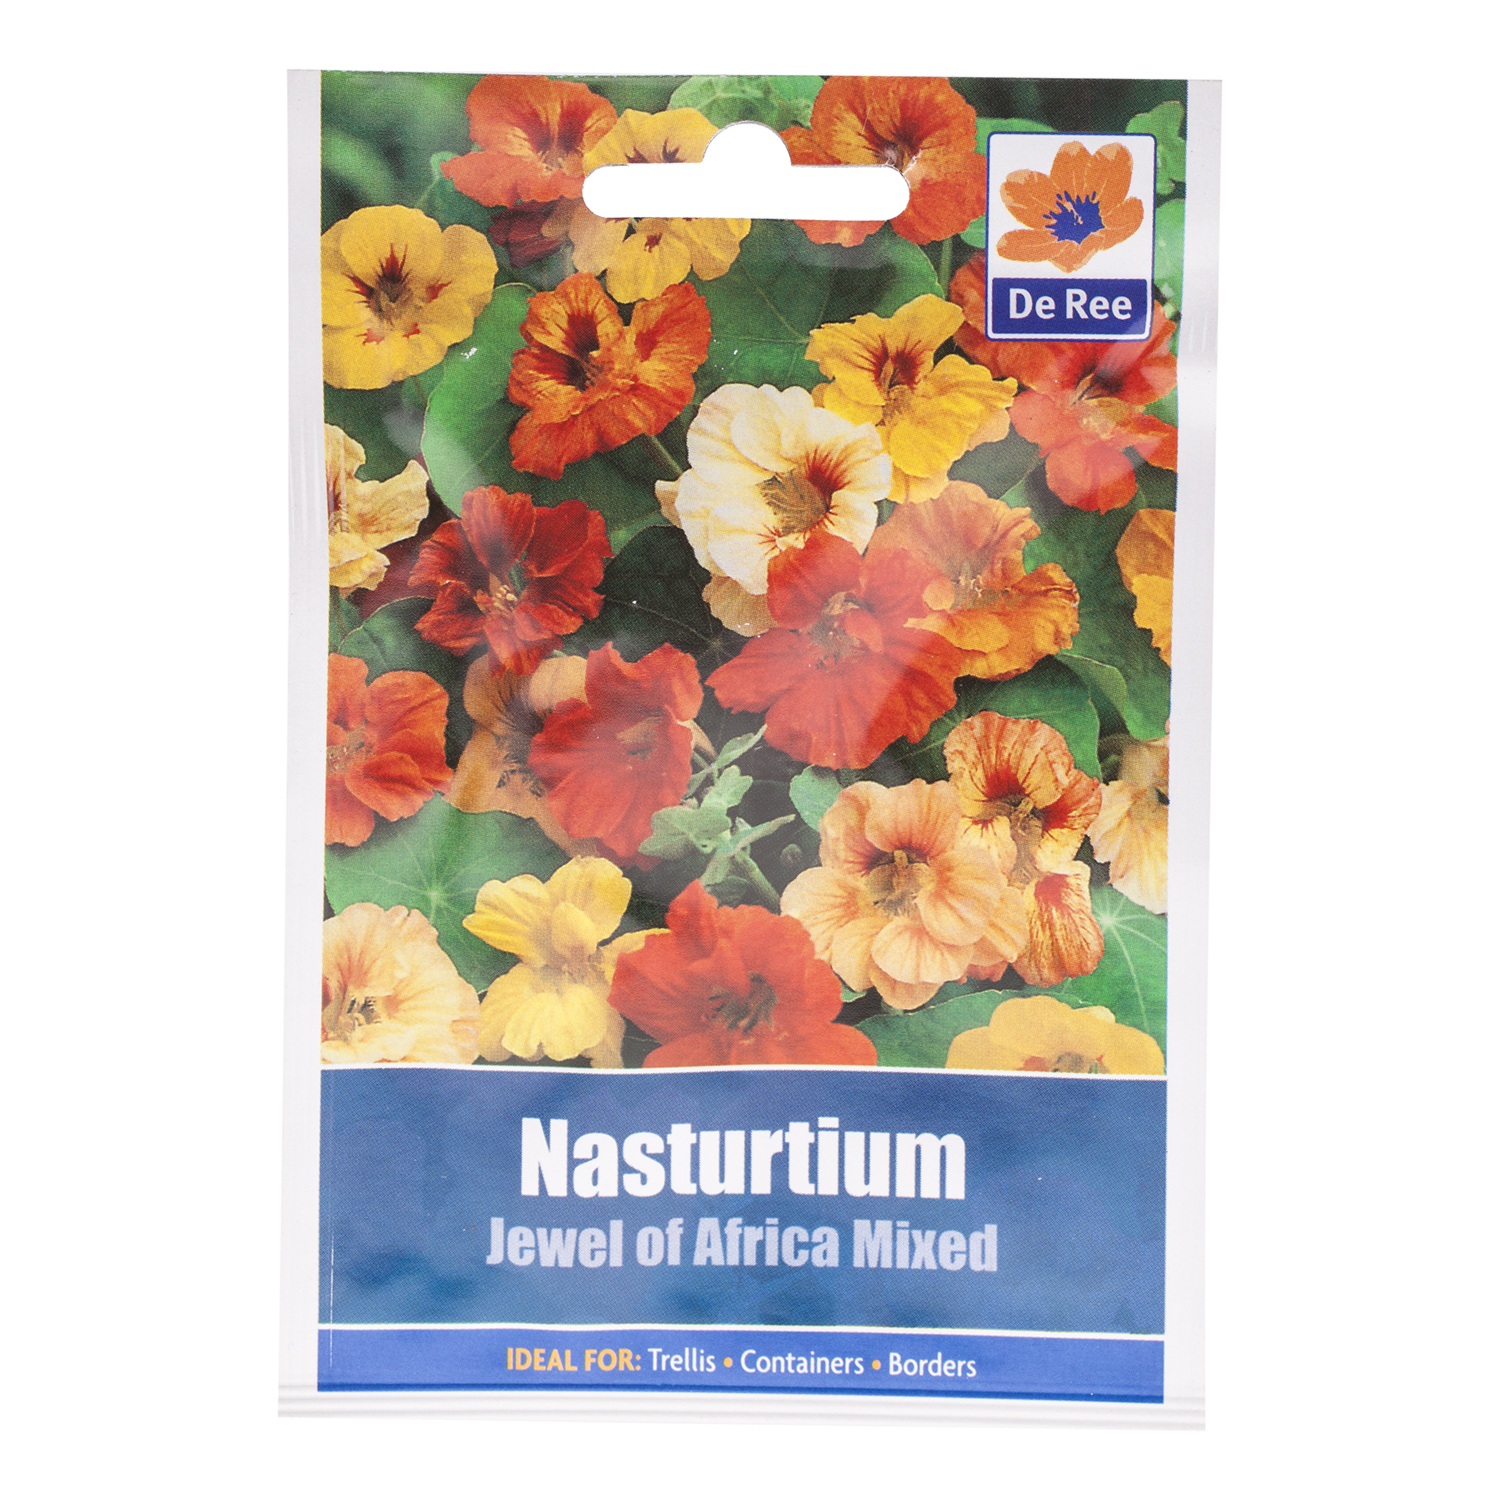 Nasturtium Jewel of Africa Mixed Seed Packet Image